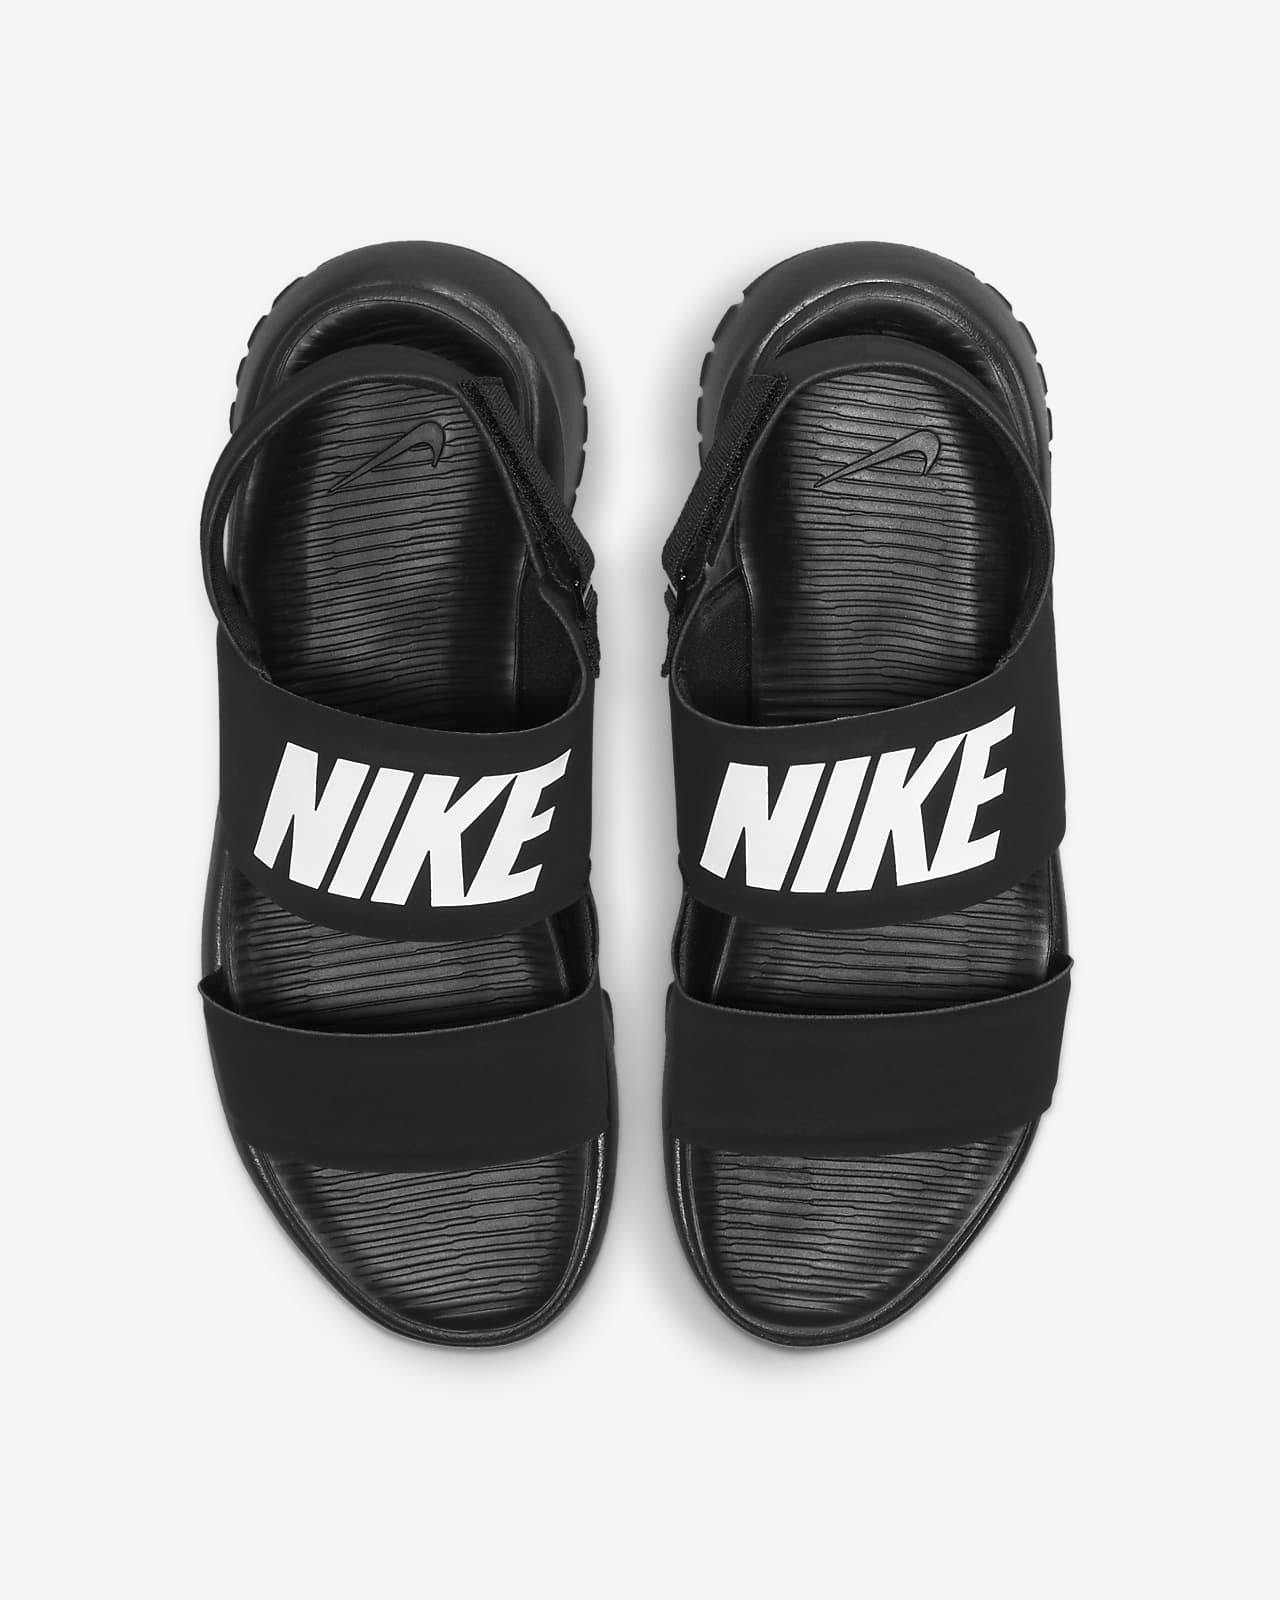 nike tanjun sandals for sale